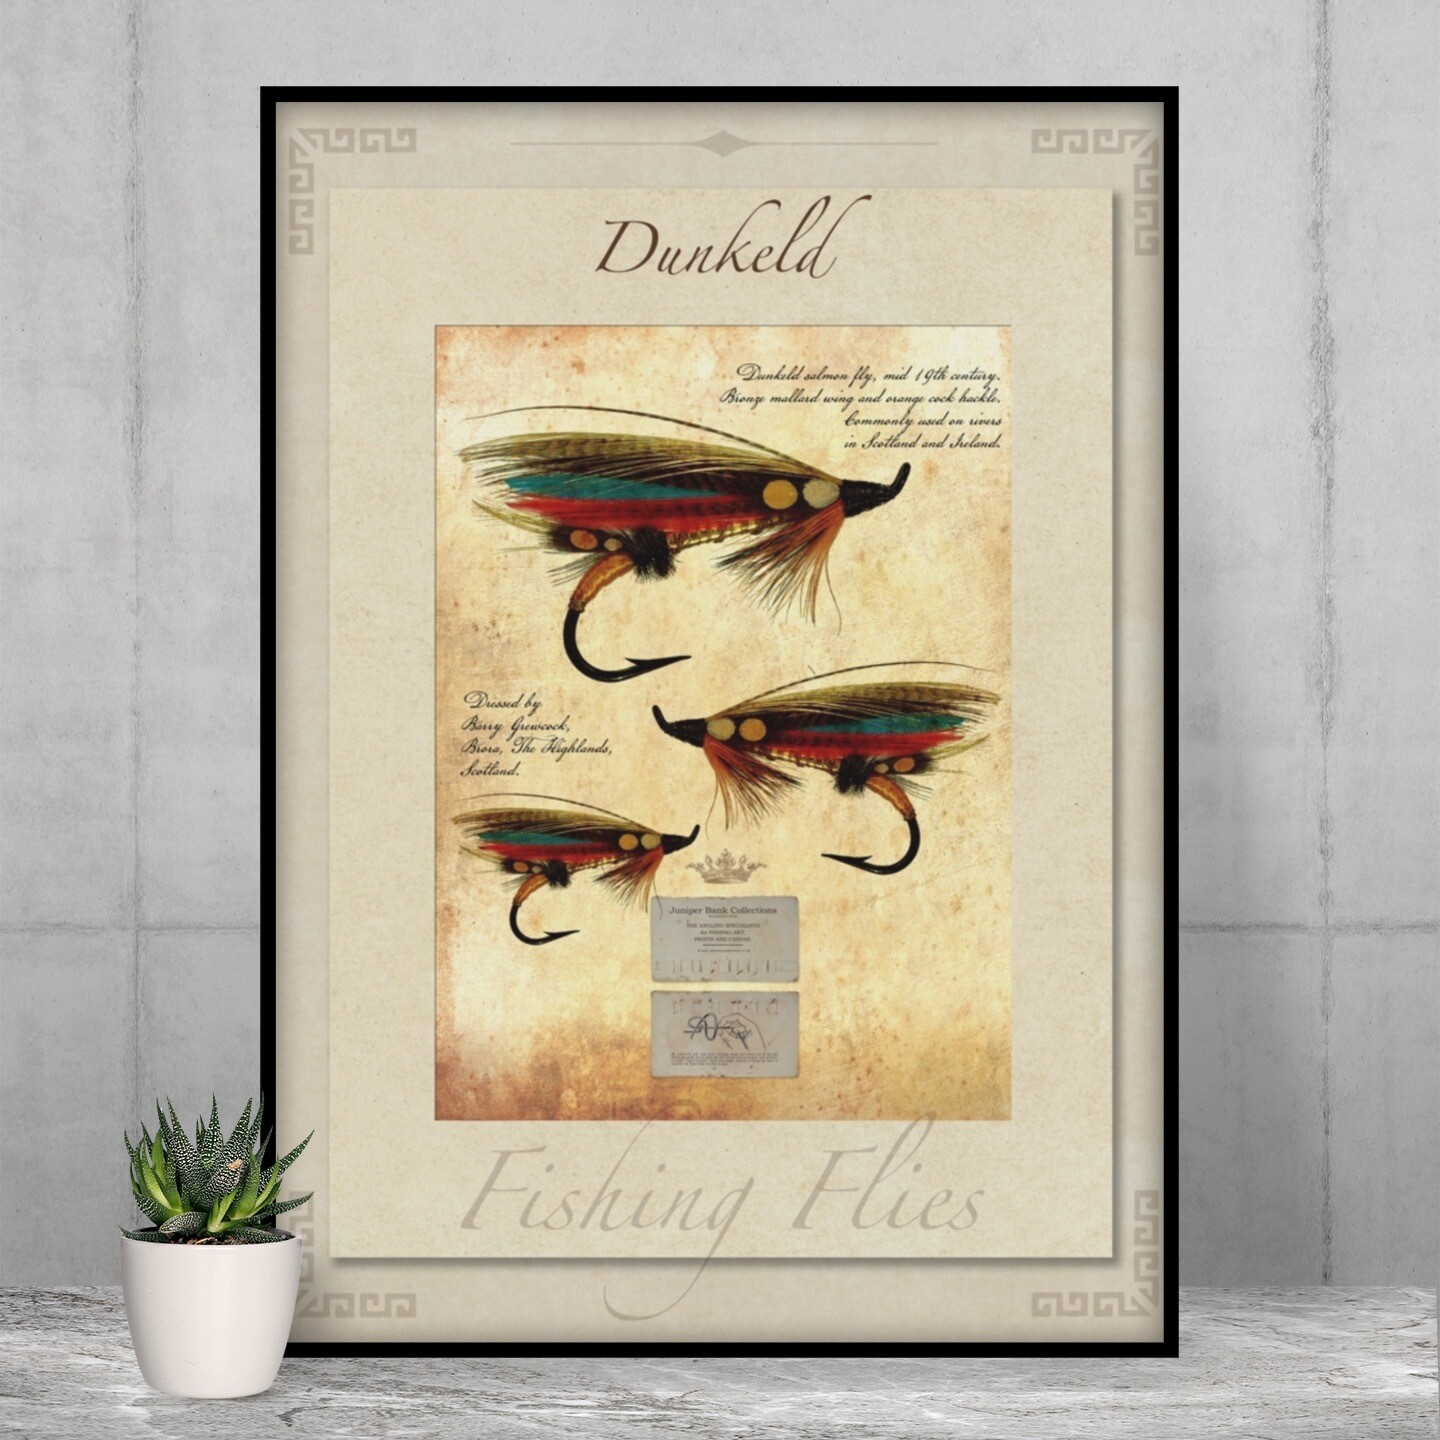 Dunkeld Salmon Fly Vintage Artwork - (24x16) High Quality Print